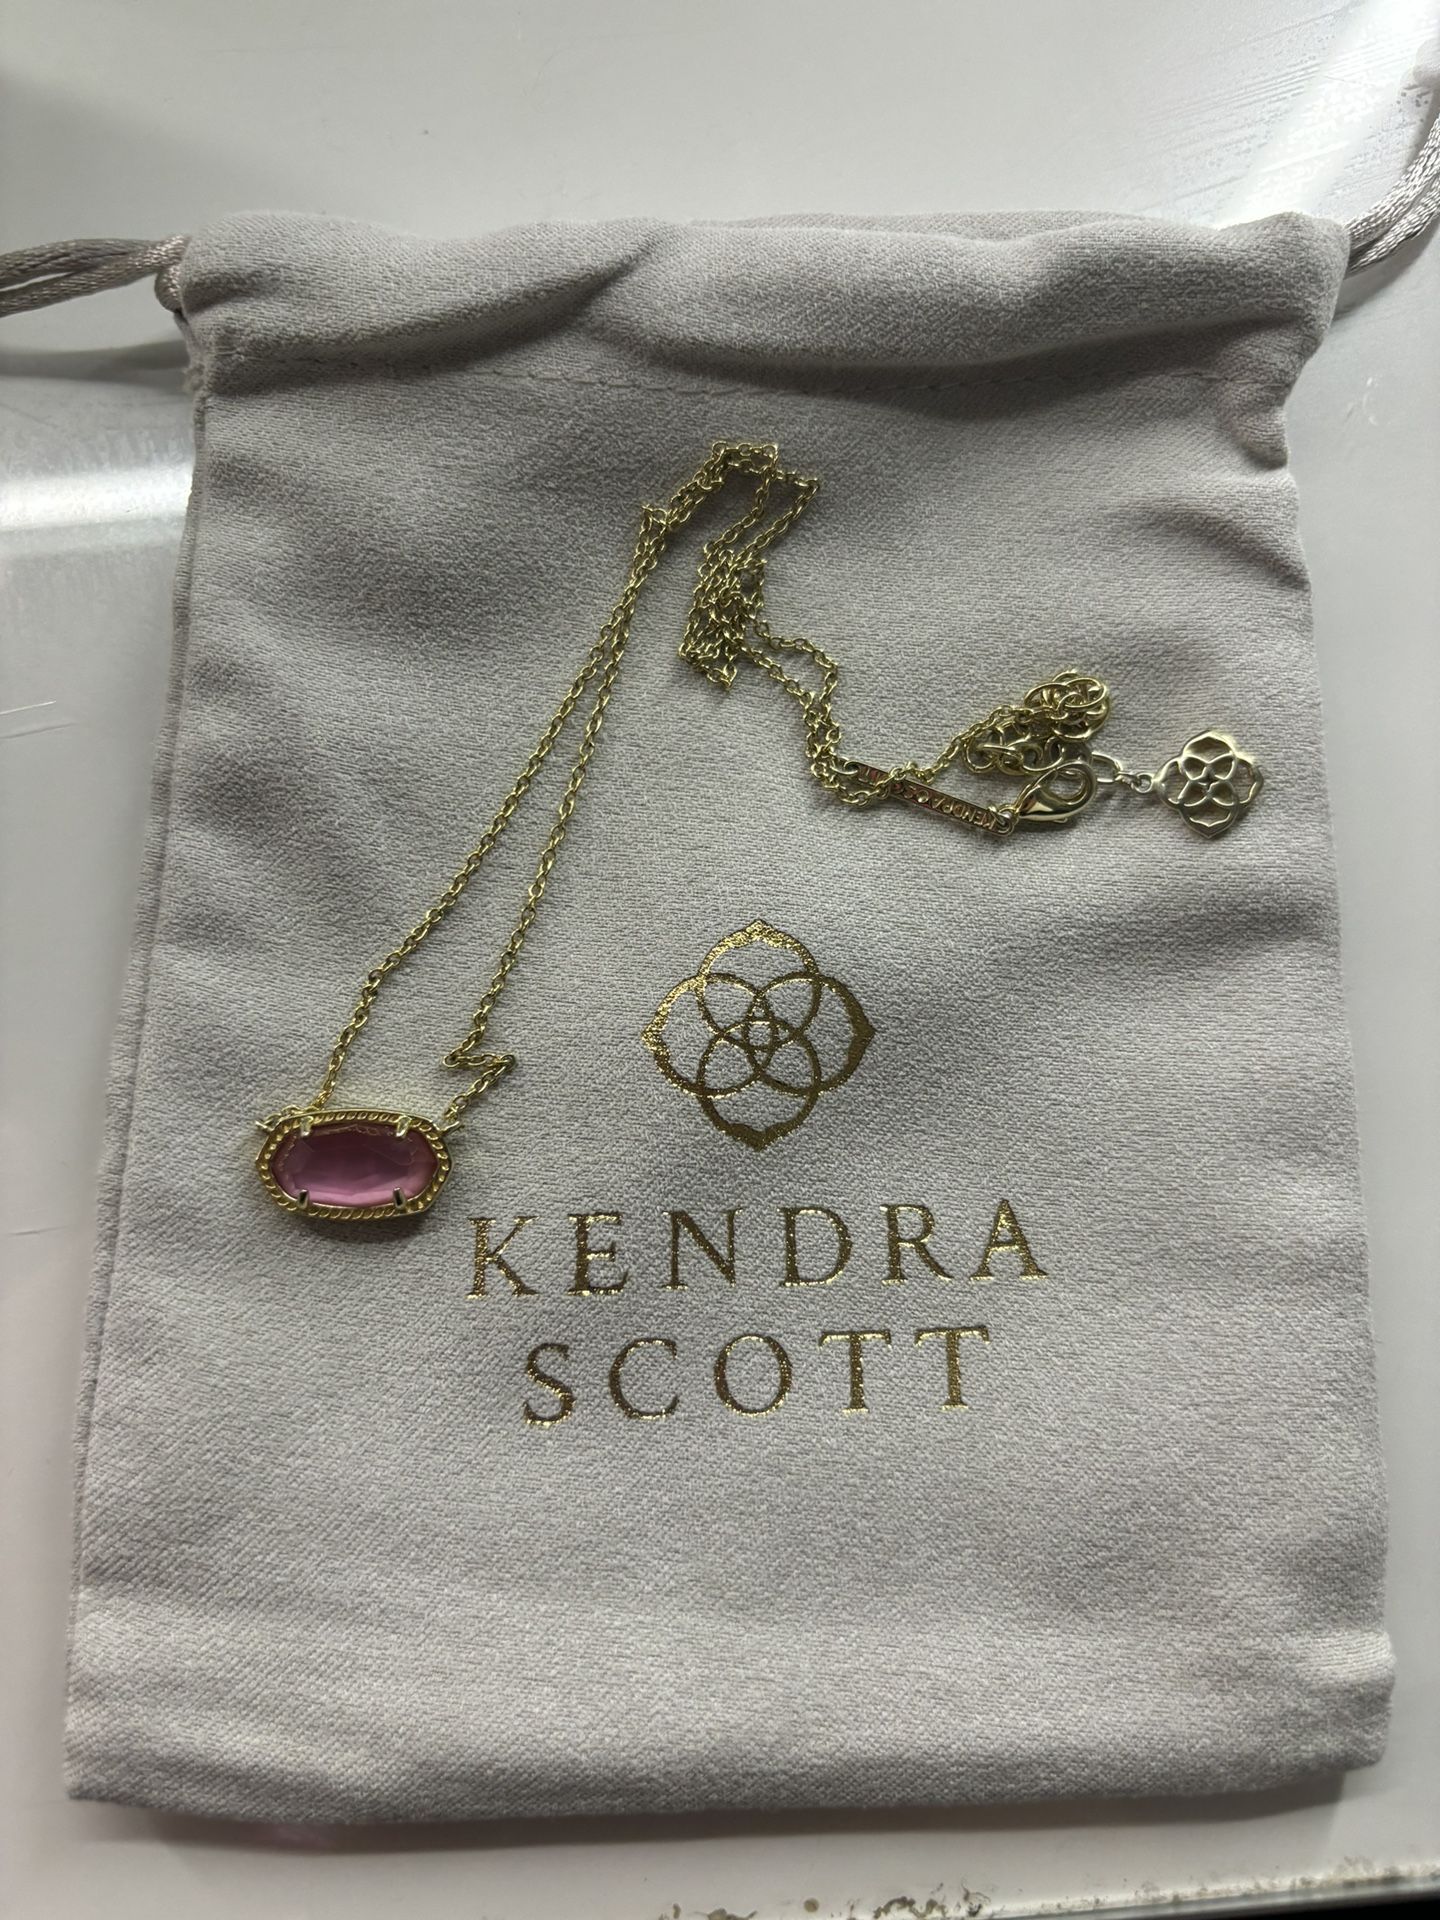 Kendra Scott necklace 